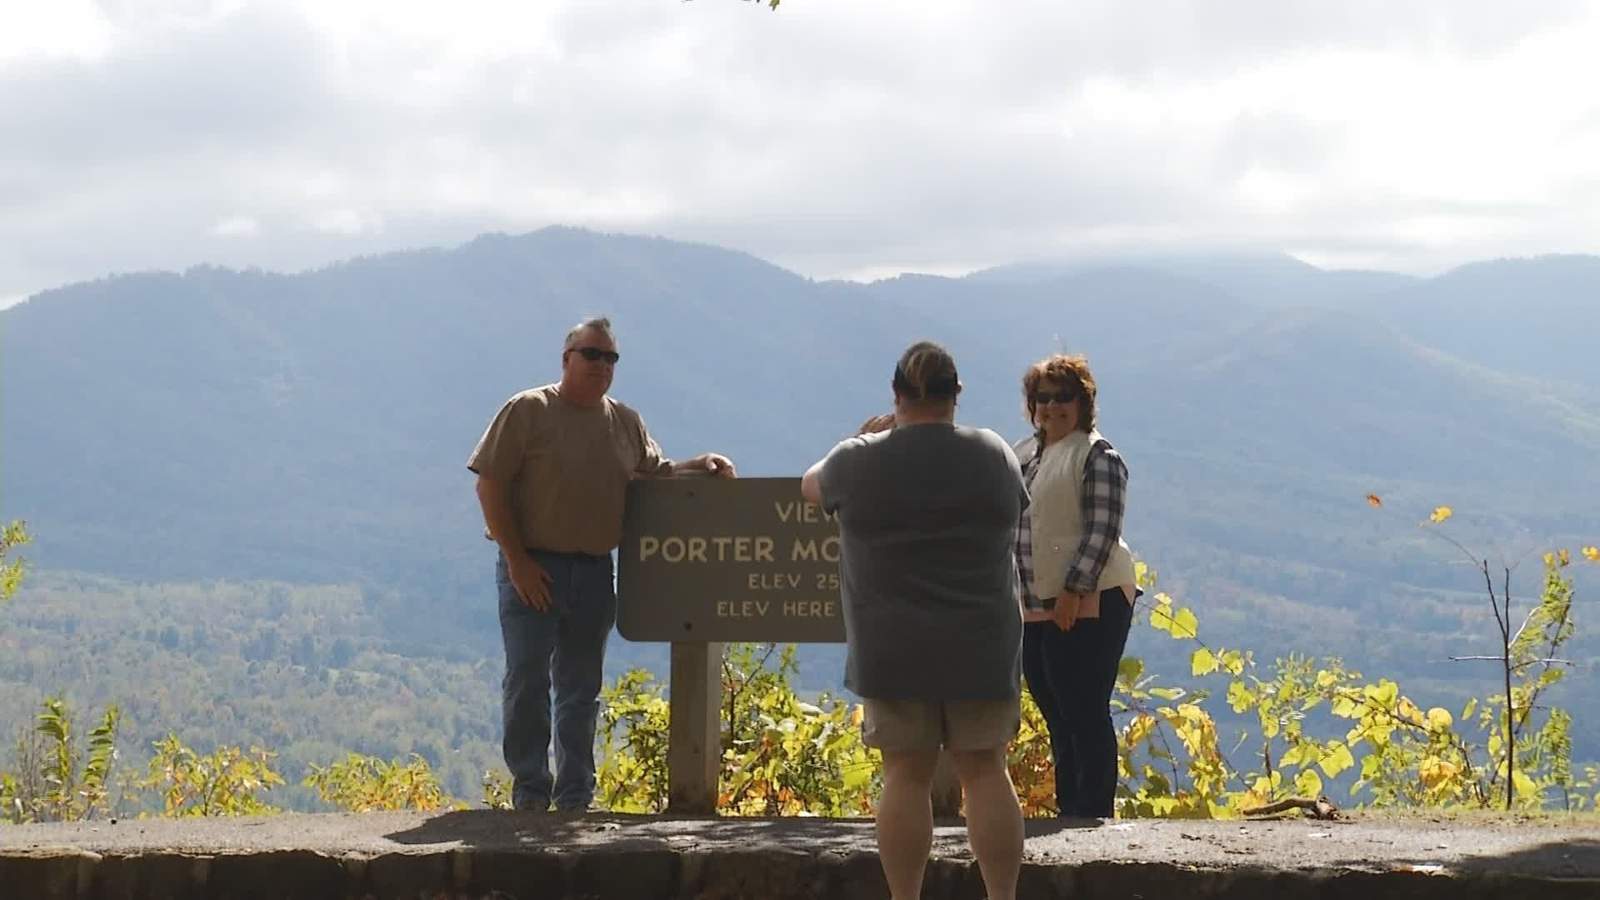 Tourism slowly rebounding in Virginia’s Blue Ridge